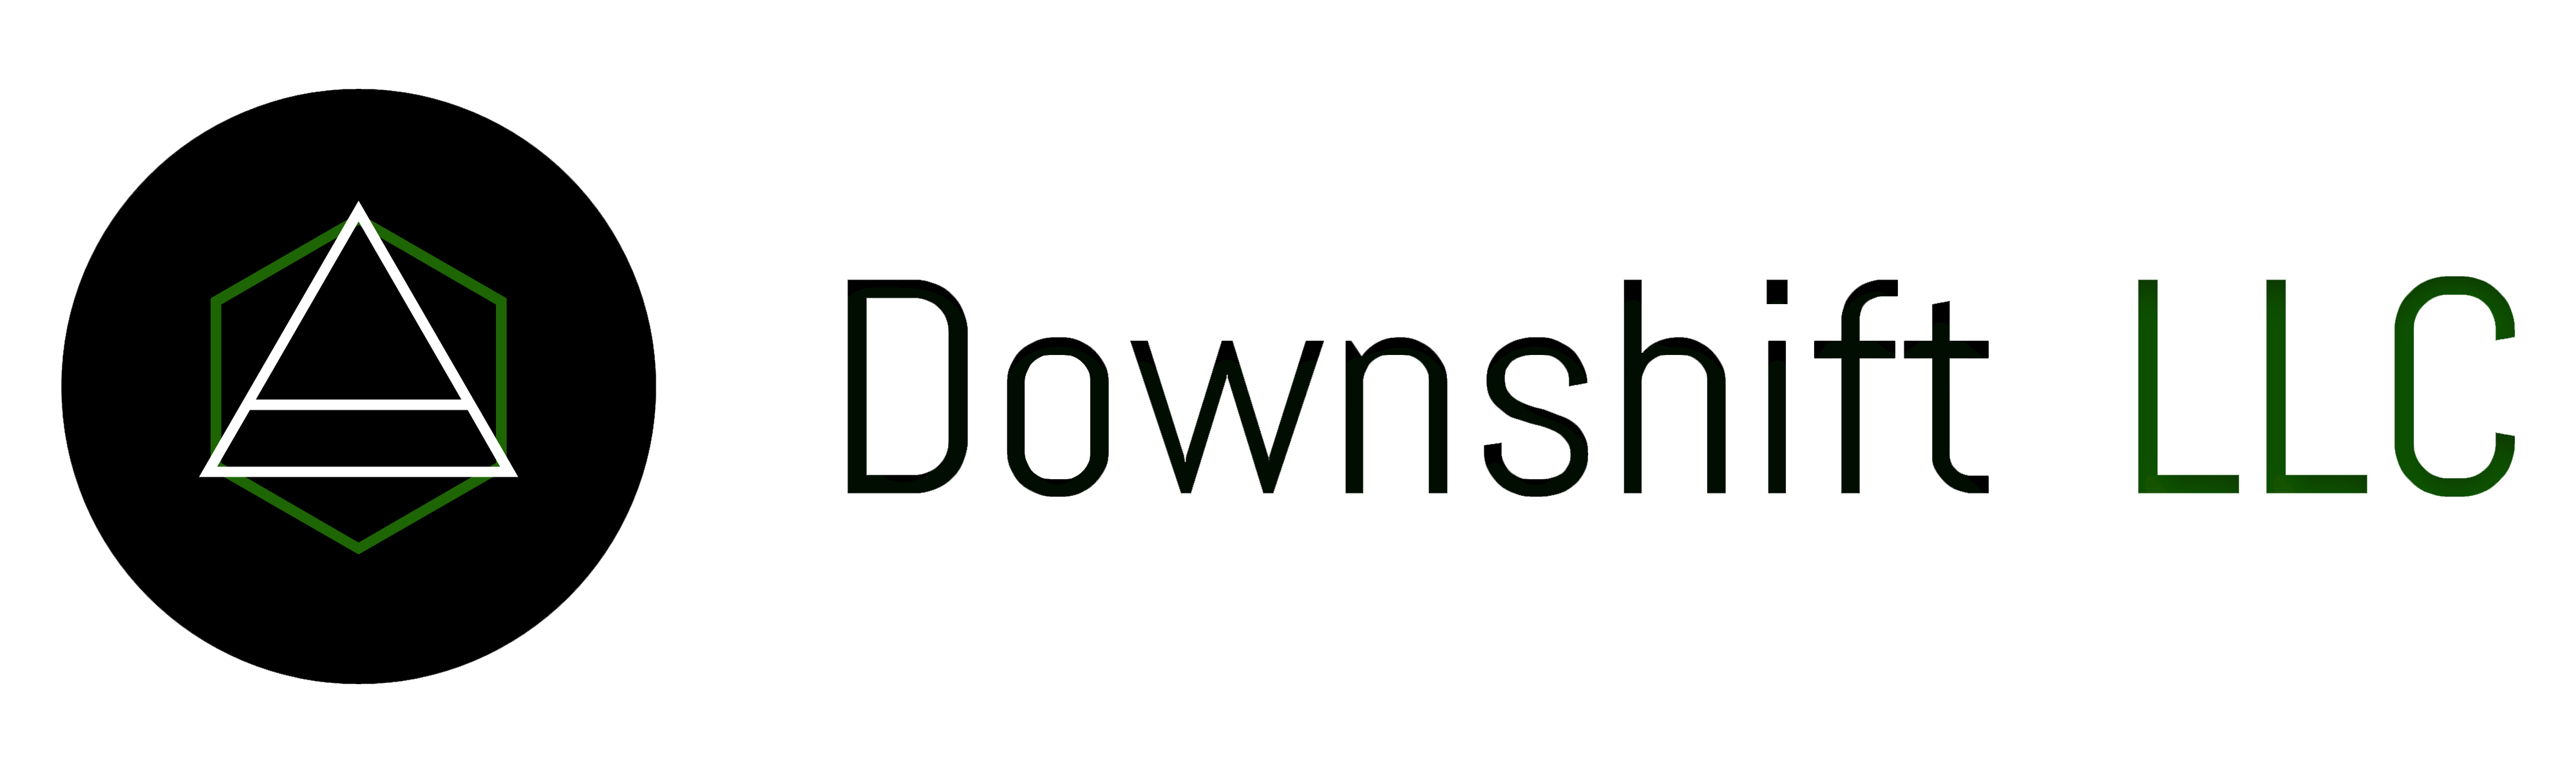 Downshift Text Logo